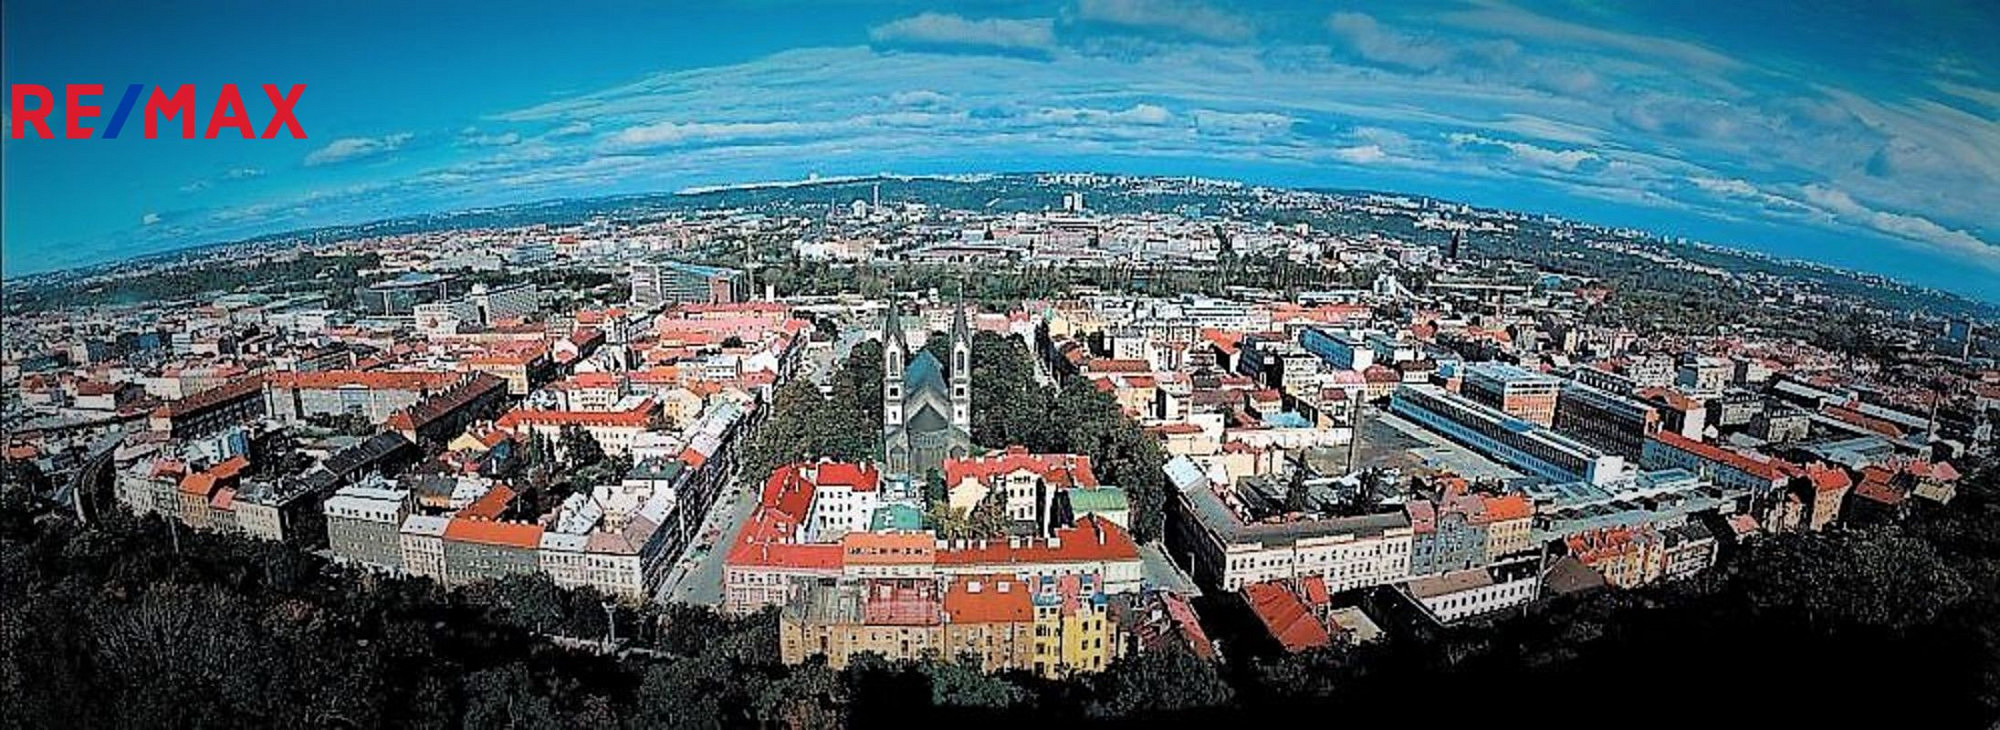 Praha 8 - Libeň